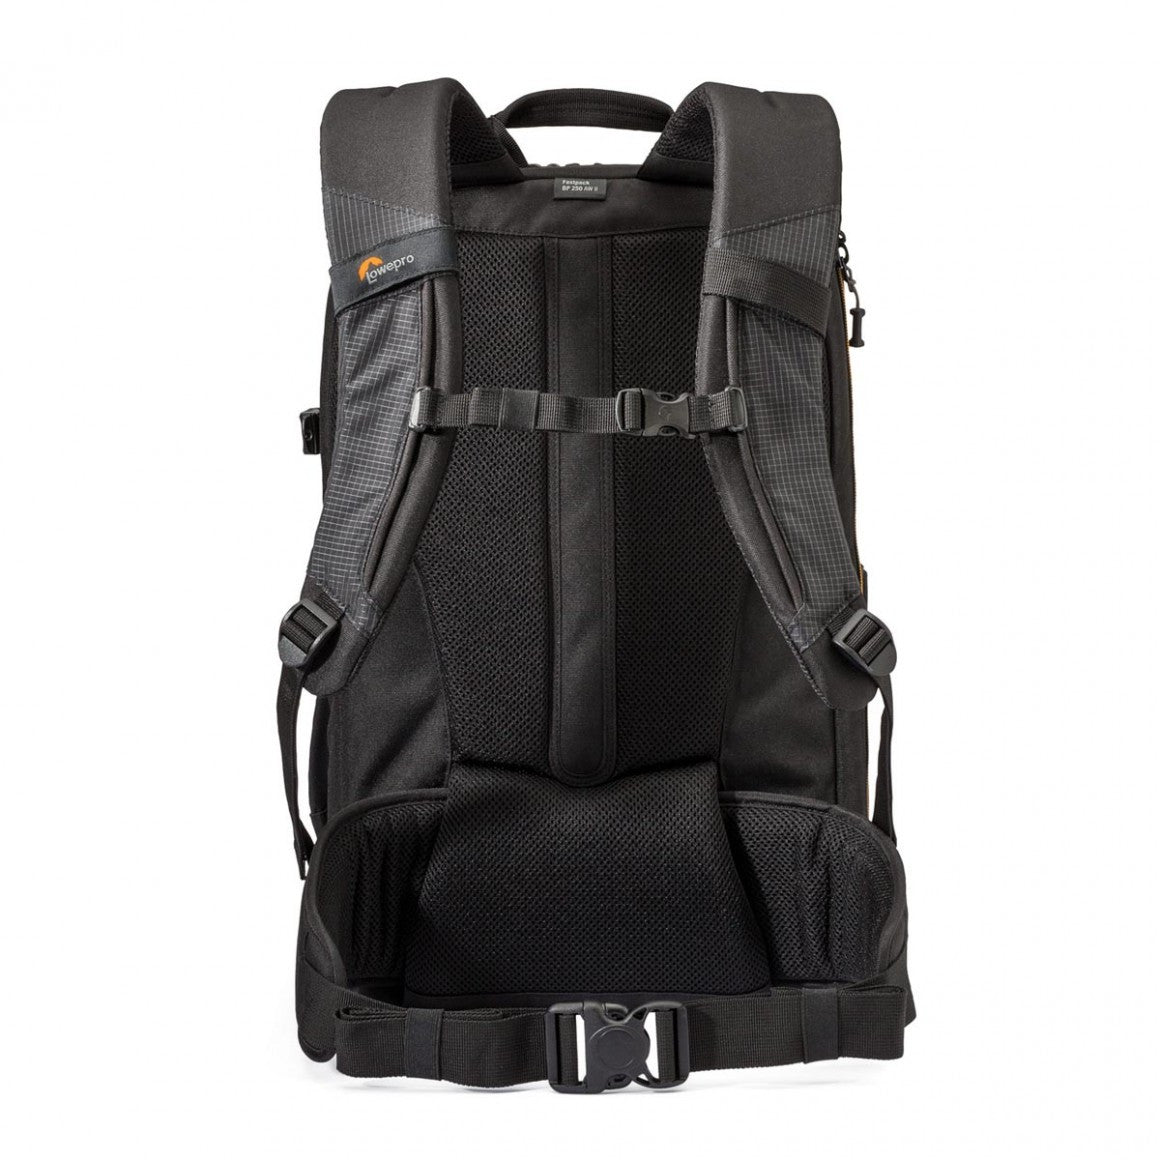 Lowepro Fastpack 250 AW II Backpack (Black), bags backpacks, Lowepro - Pictureline  - 3